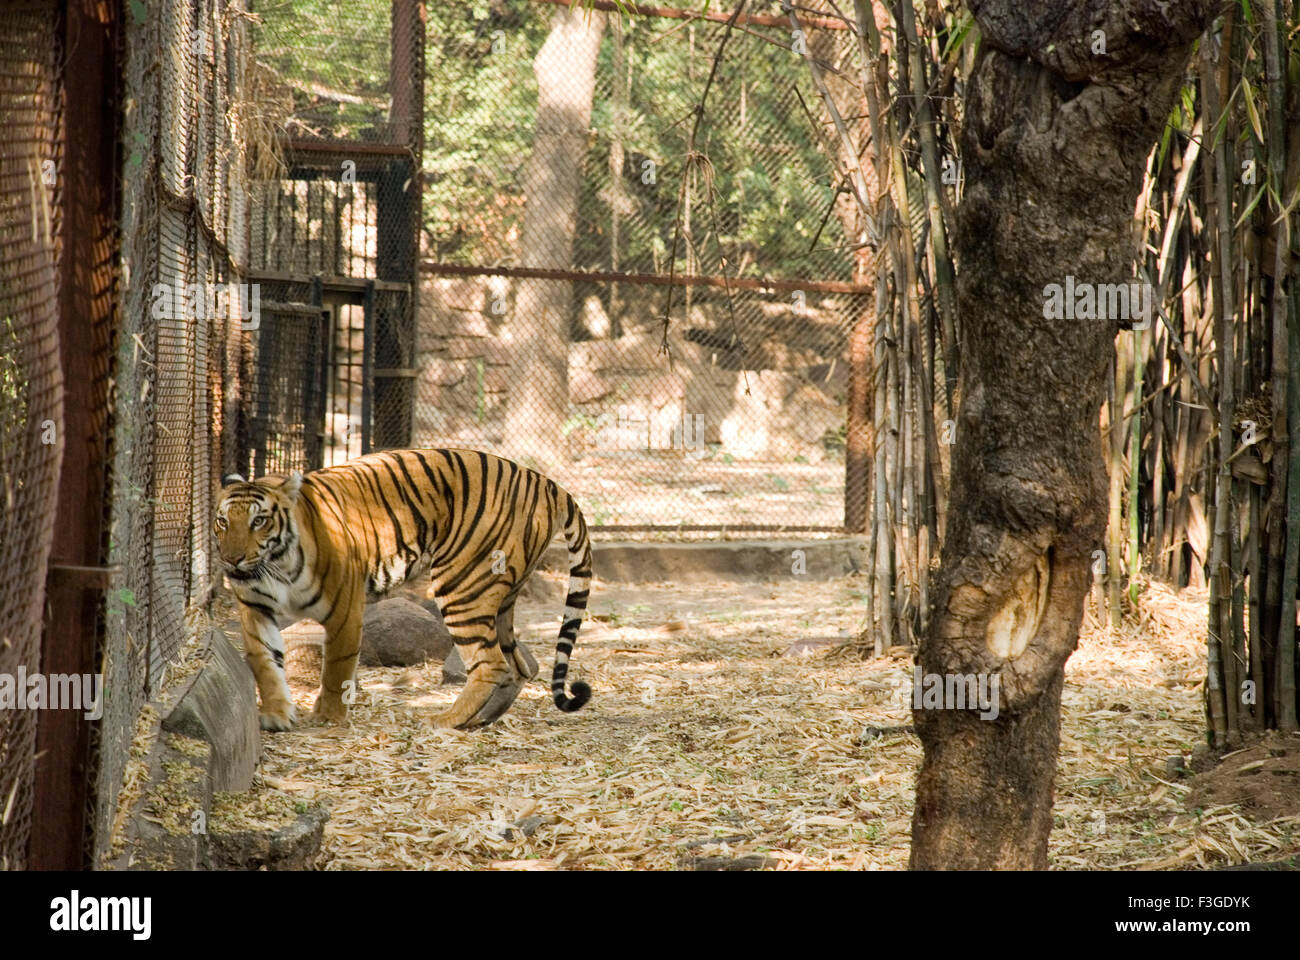 Tiger in zoo, Panthera tigris, India, Asia Stock Photo